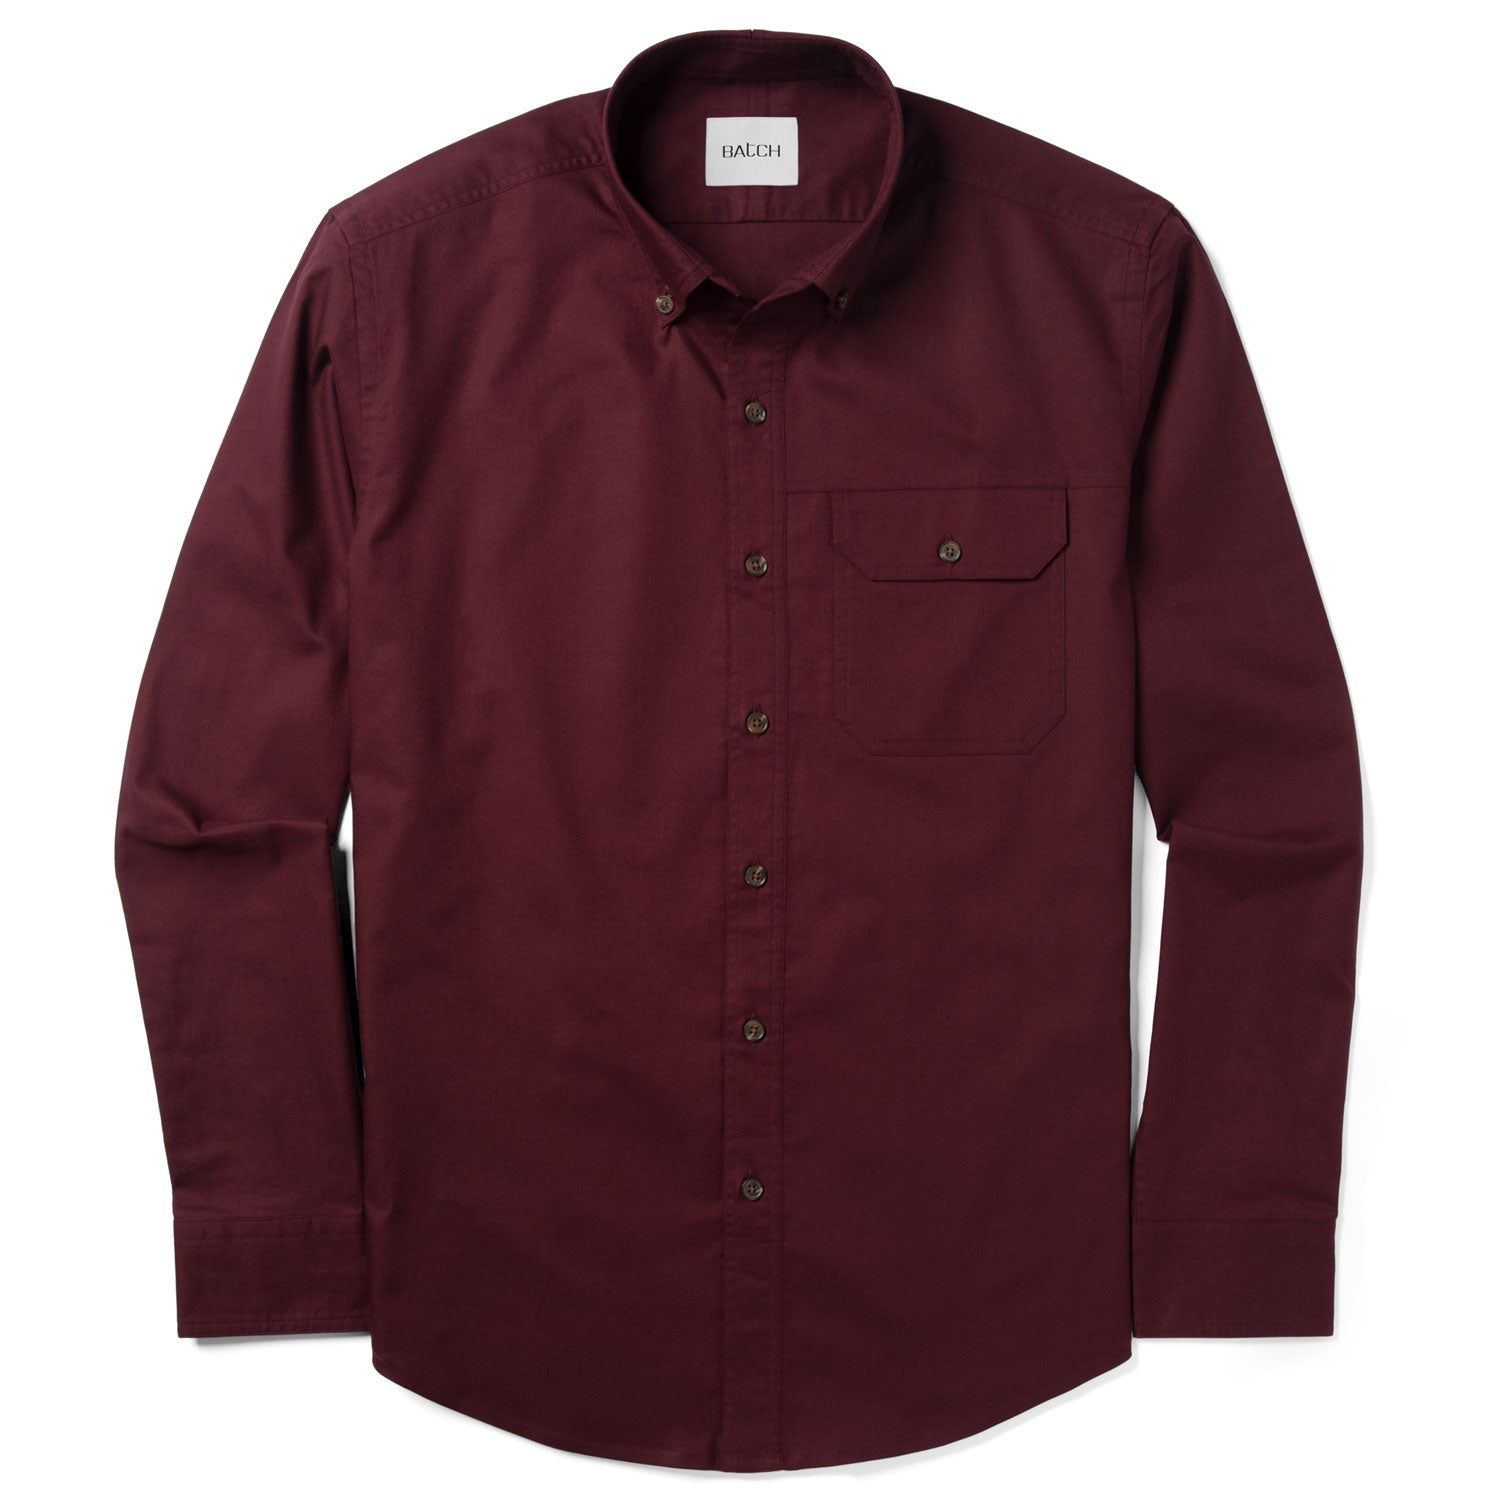 Builder Casual Shirt – Burgundy Cotton Oxford